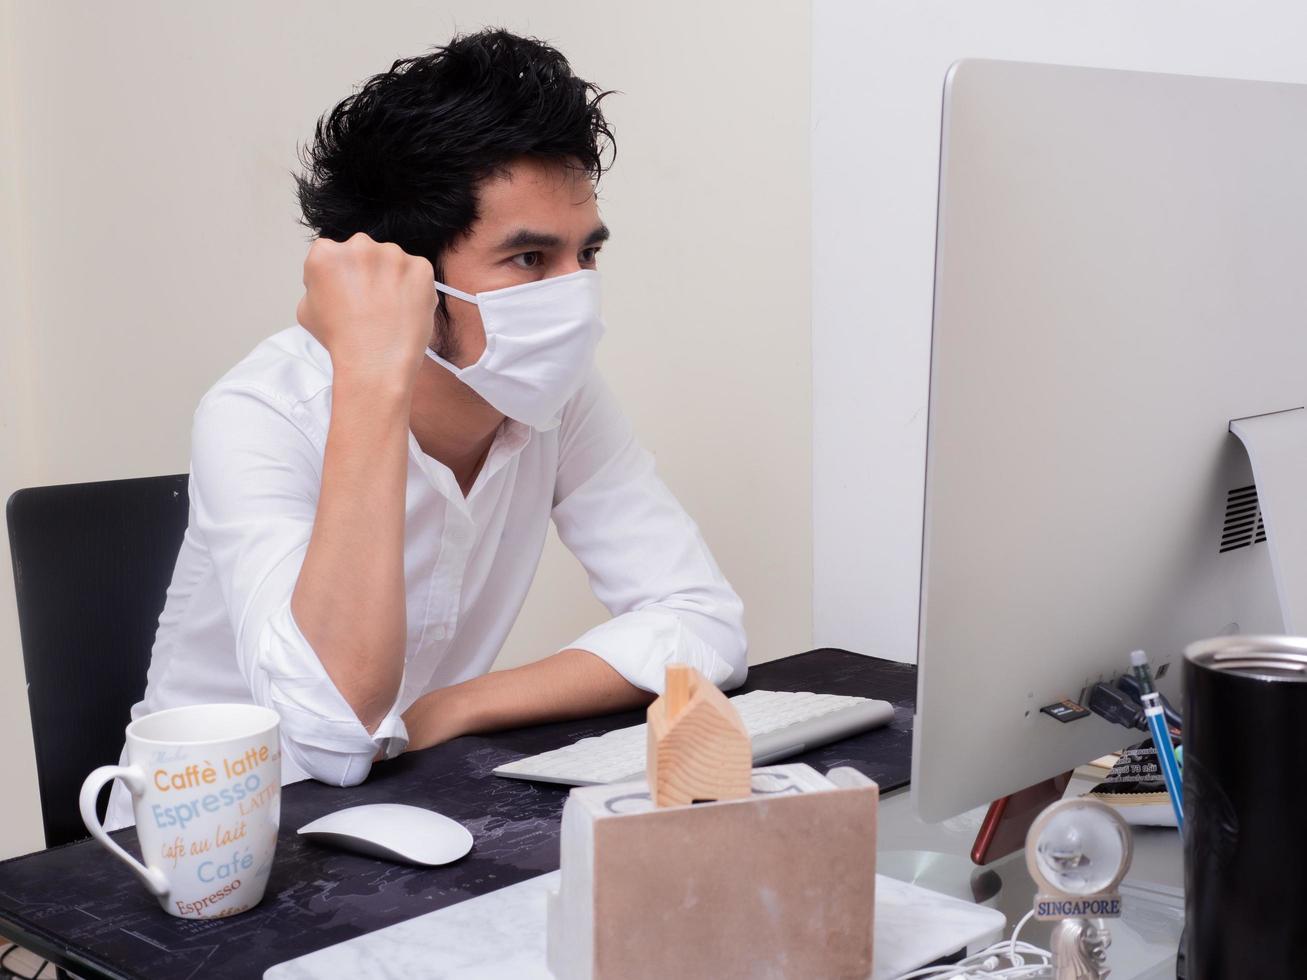 Young Asian boy wearing face mask working on laptop computer during coronavirus pandemic photo